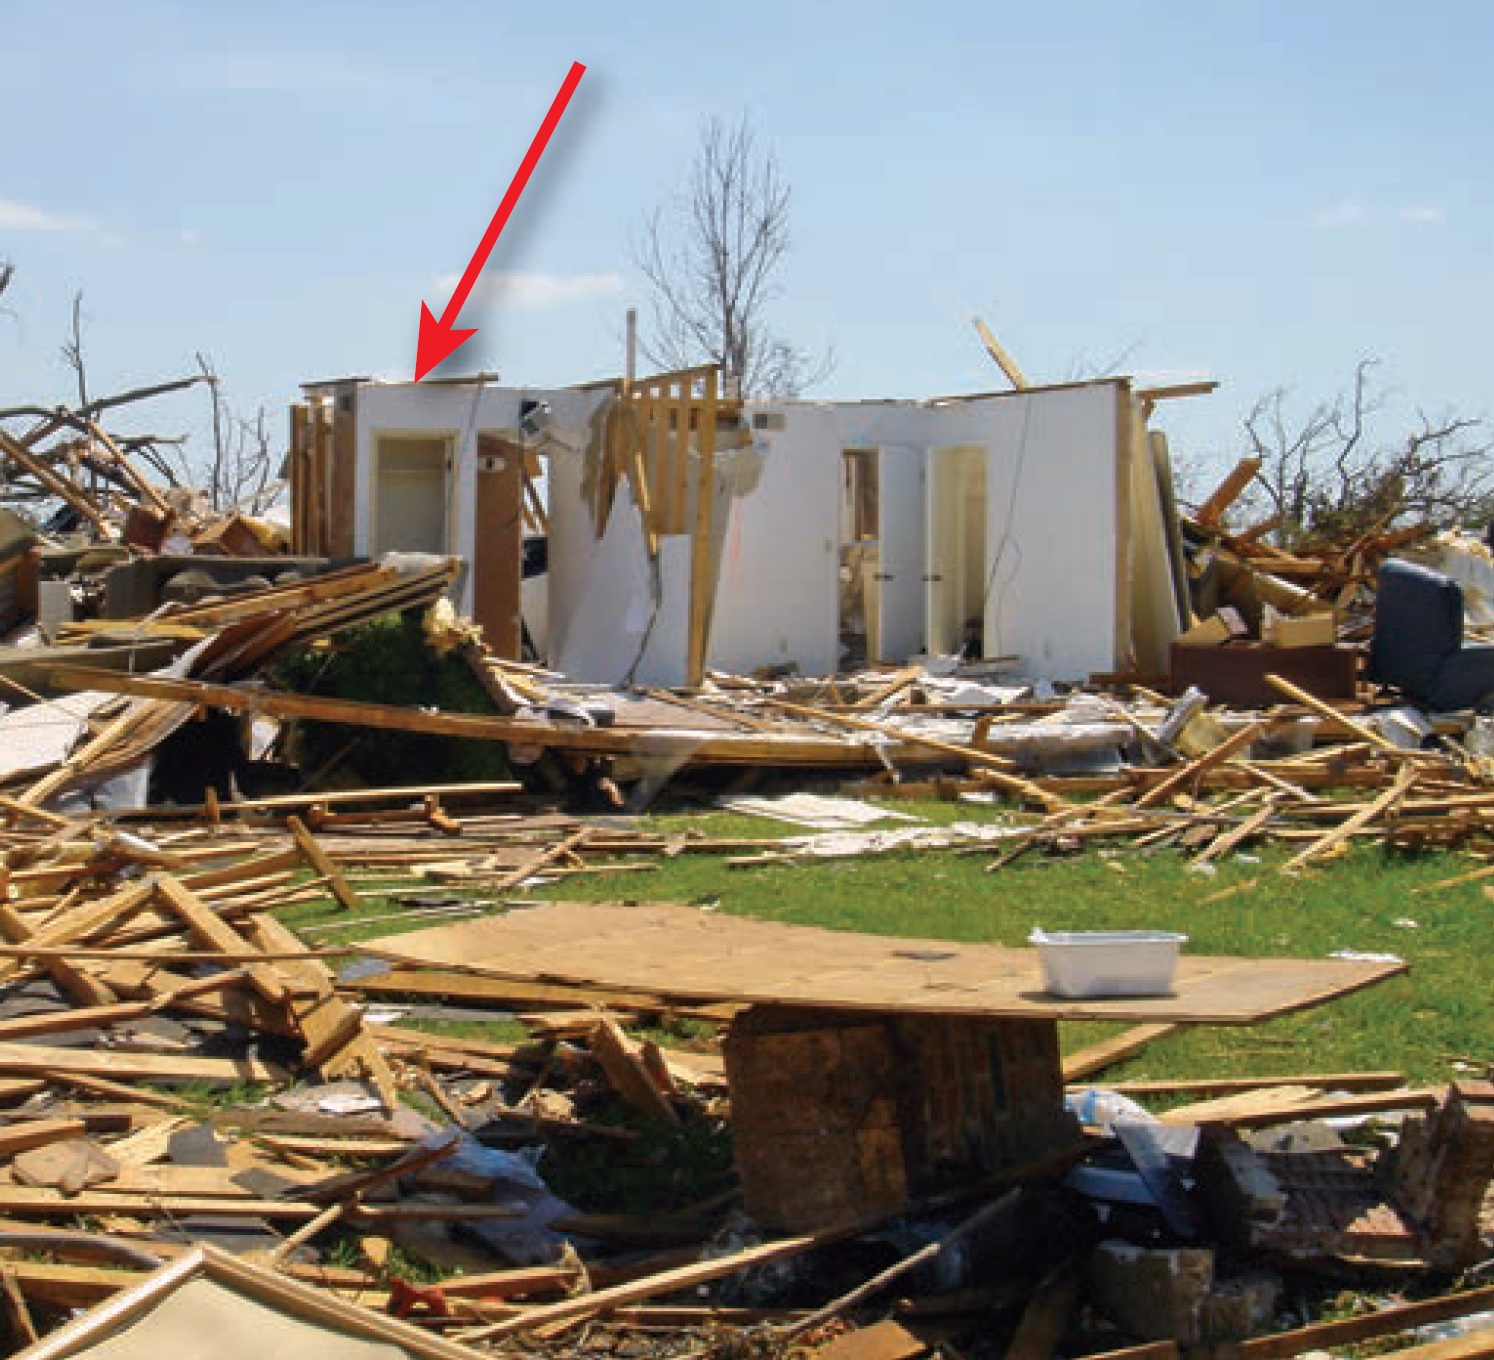 An interior closet left partially intact after an EF4 tornado in Tuscaloosa, AL, 2011.